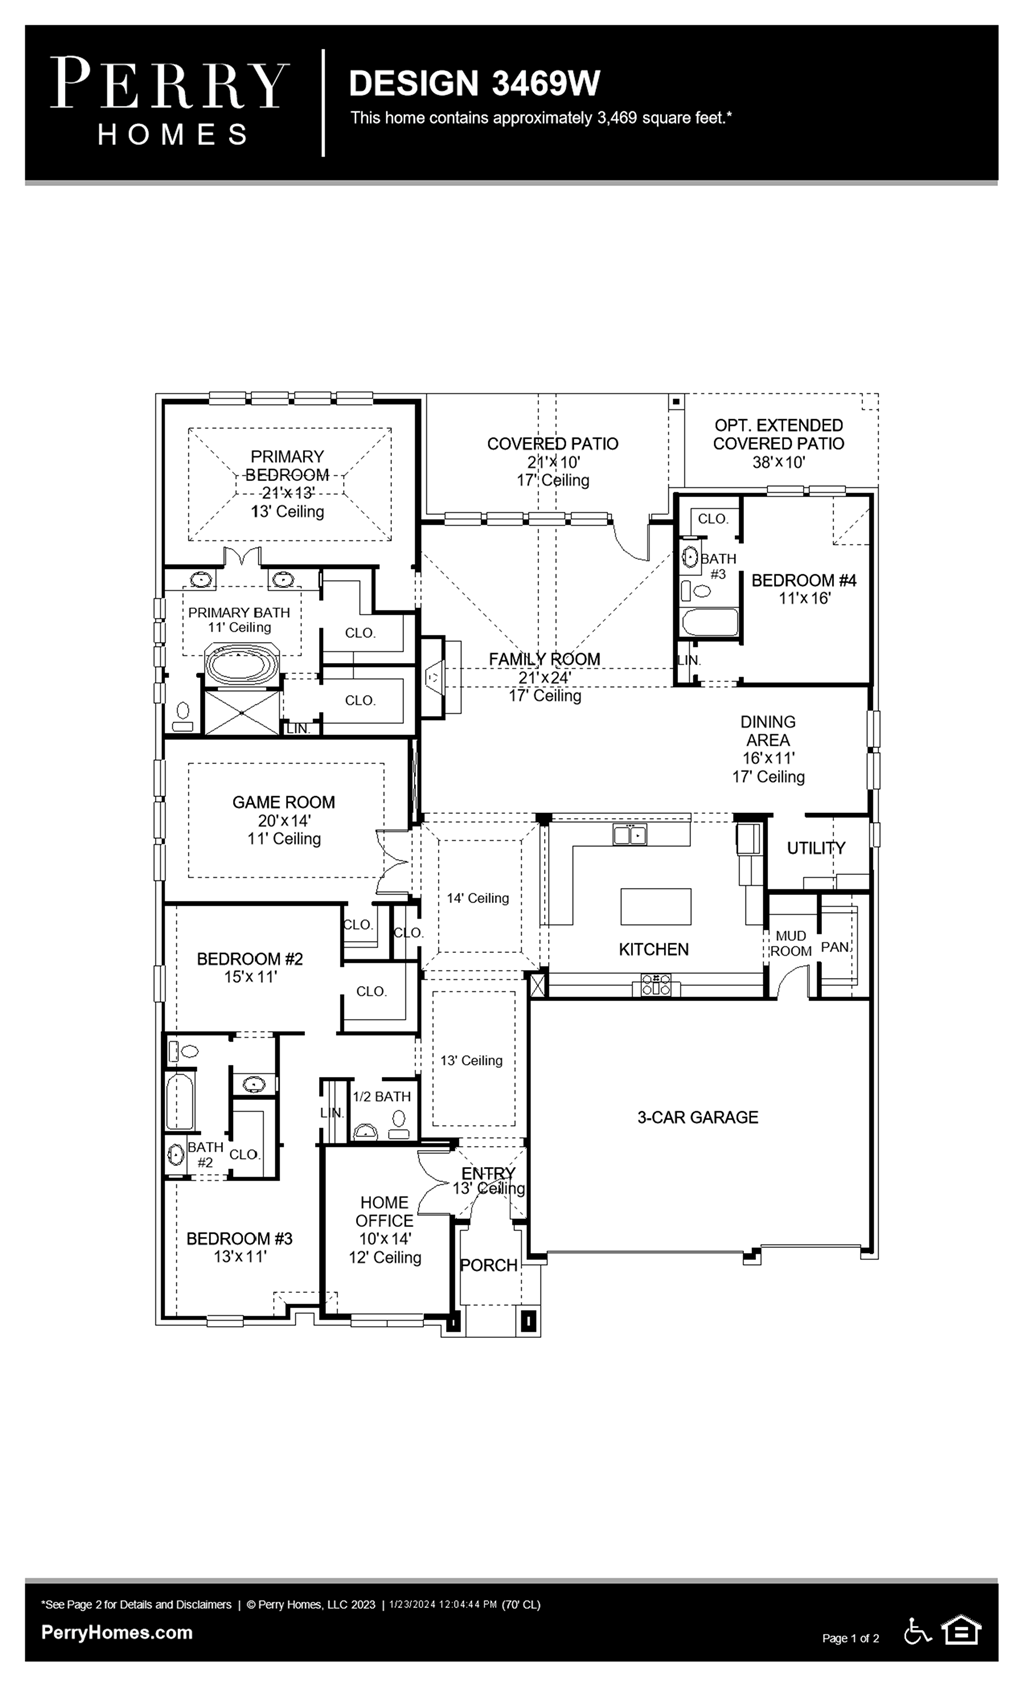 Floor Plan for 3469W